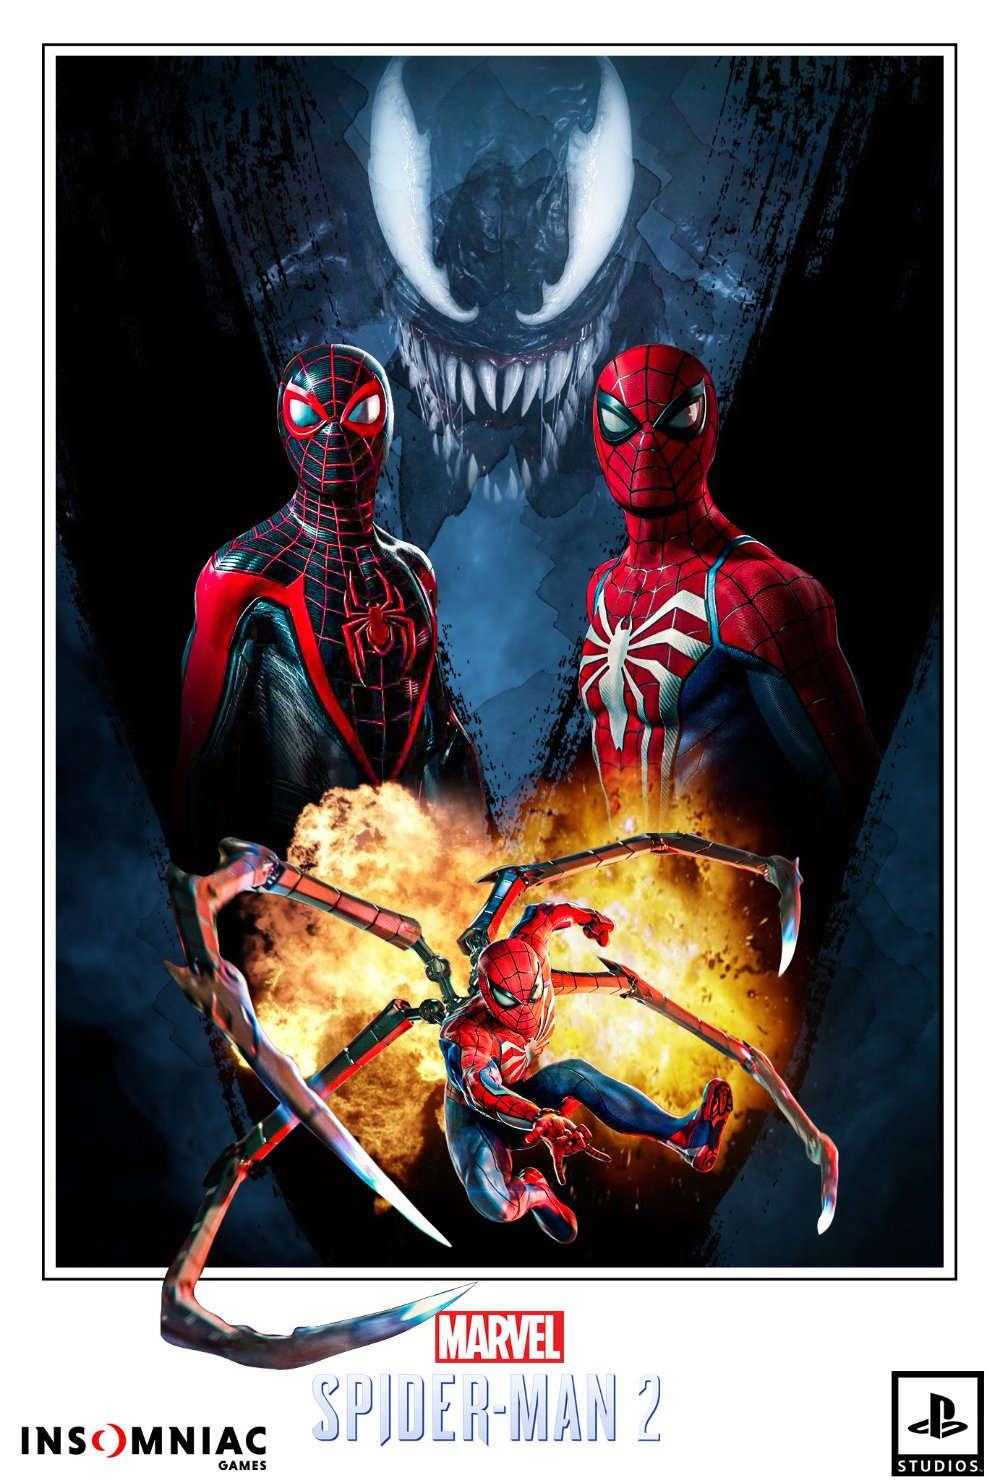 Spider-Man 2 Spiderman 2 Miles Morales Peter Parker 18"x28" (45cm/70cm) Poster